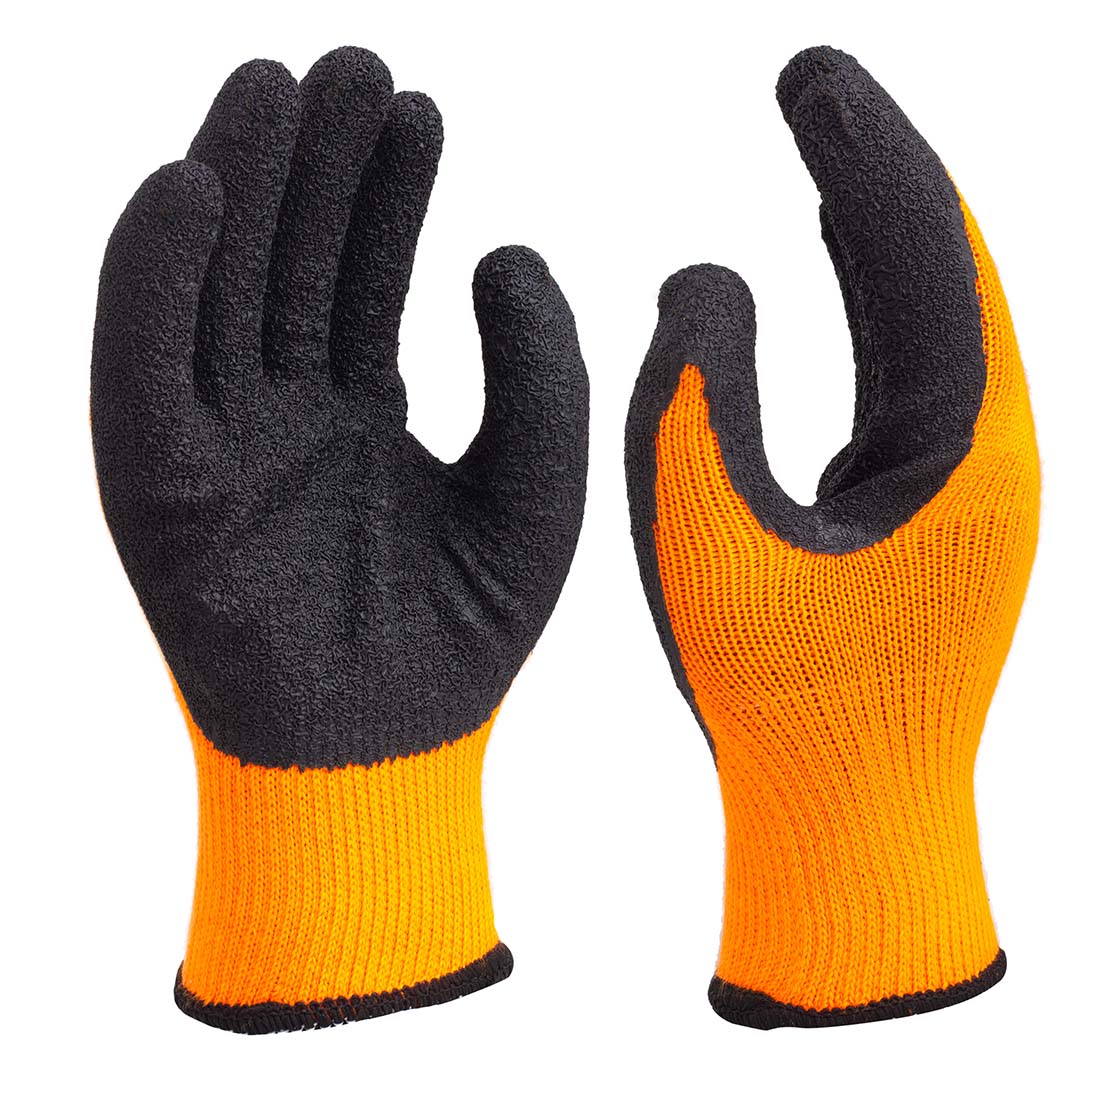 7G Acrylic liner gloves | 7G crinkle coated gloves | Crinkle coated gloves